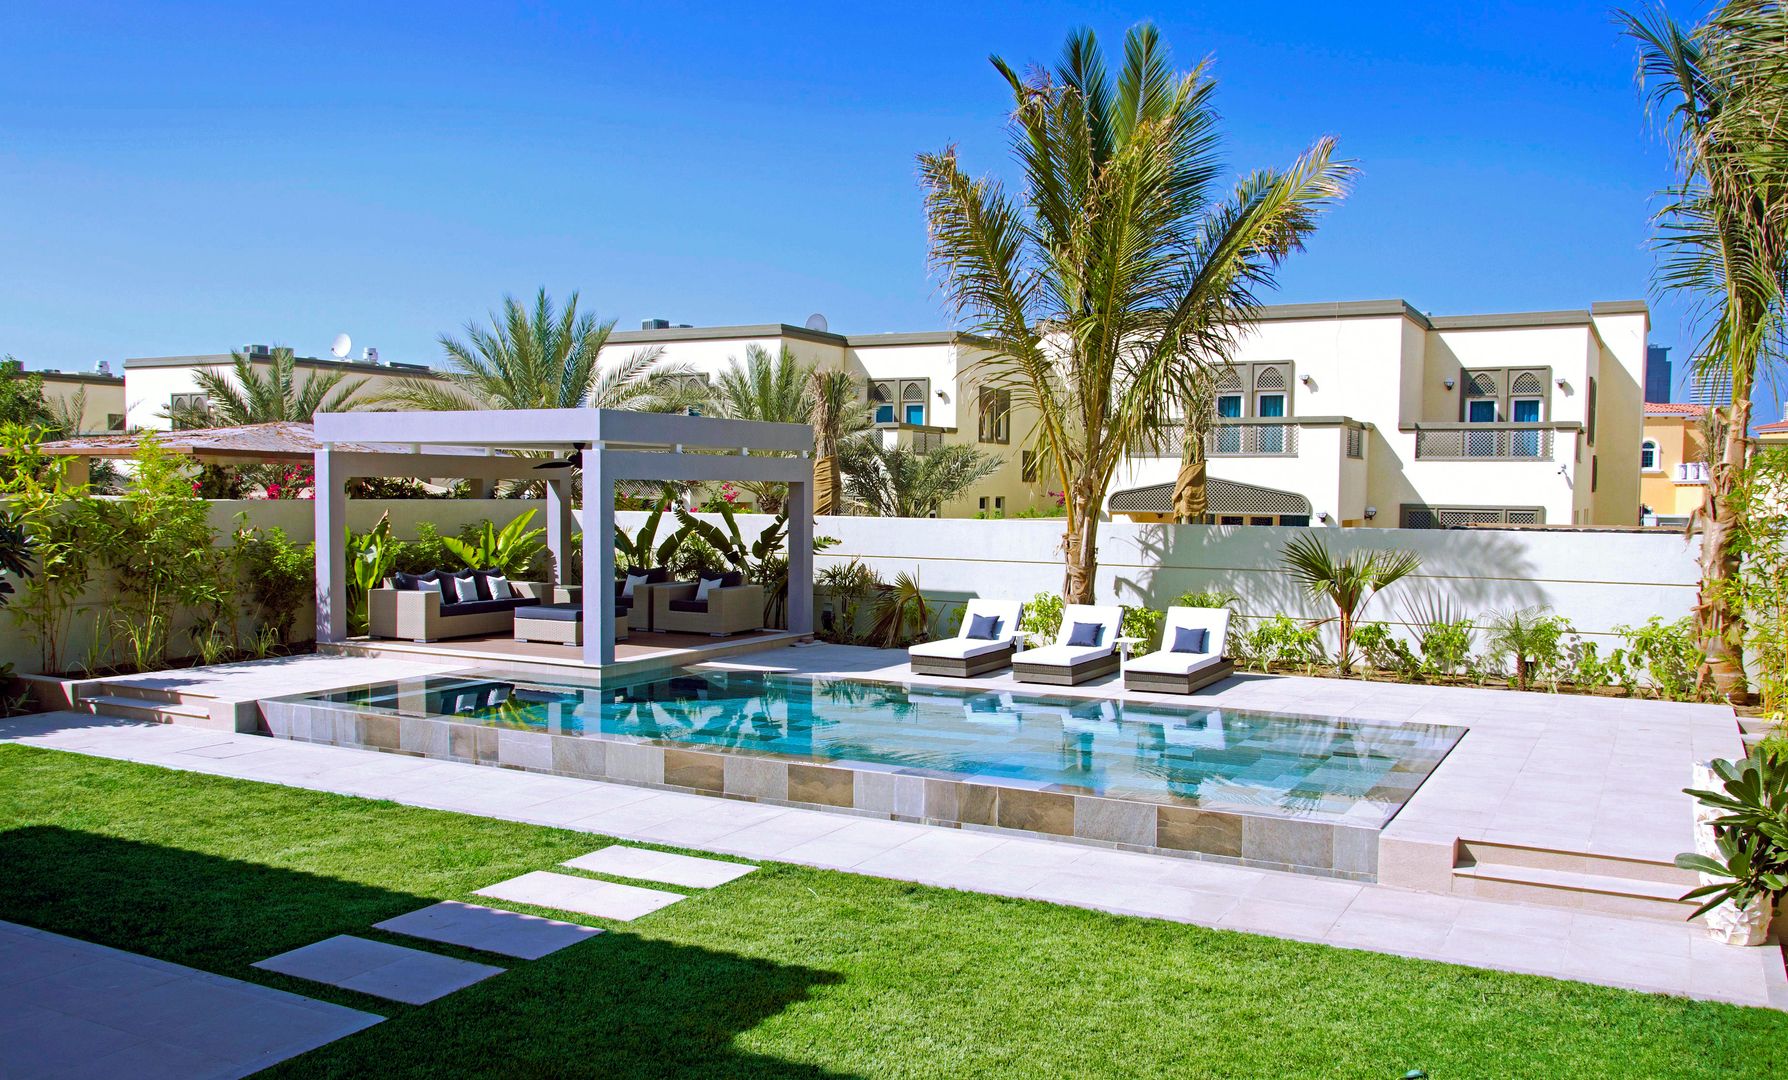 Infinity pool in Italian porcelain tiles Xterior Landscaping and Pools Басейн swimming pool Dubai,landscape,design